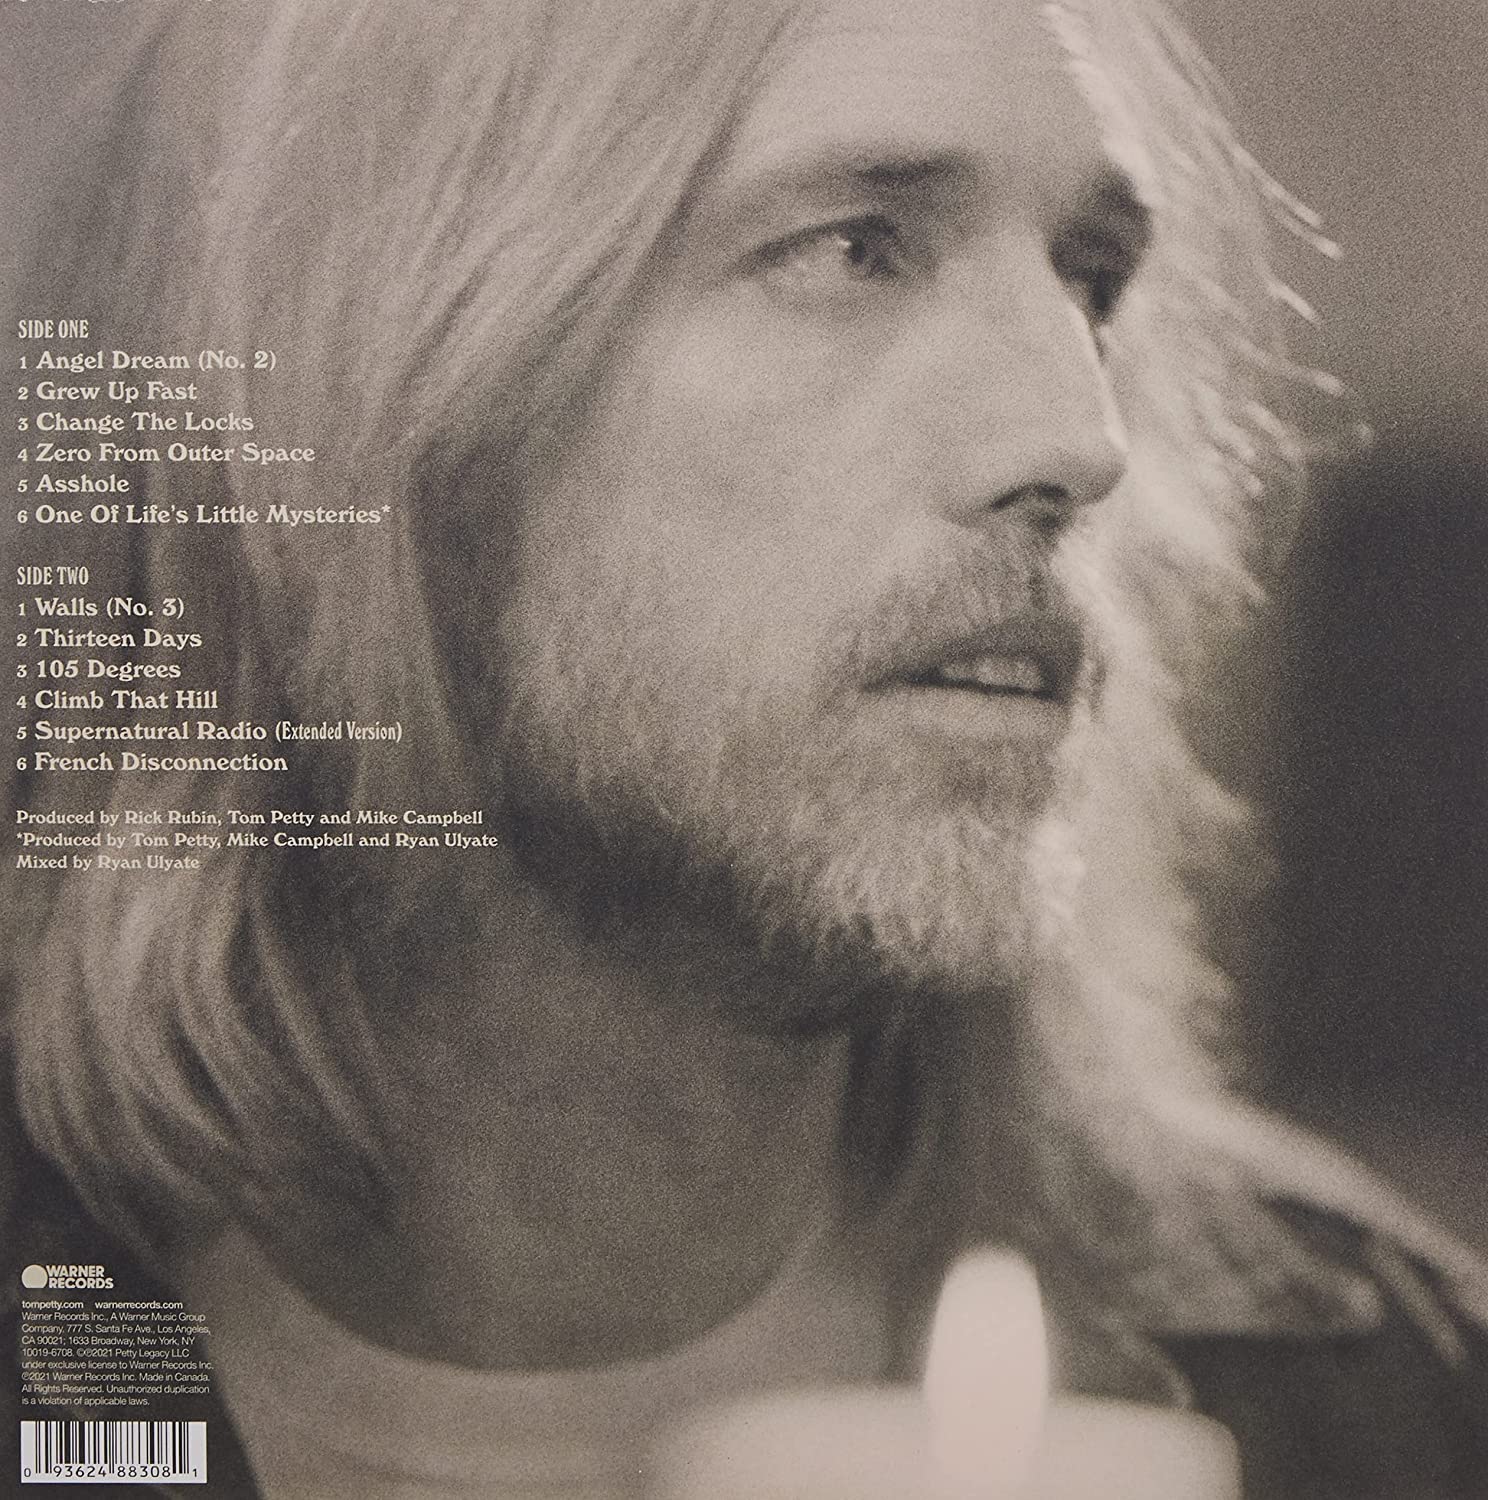 Tom Petty & The Heartbreakers (톰 페티 앤 더 하트브레이커스) - Angel Dream [LP]